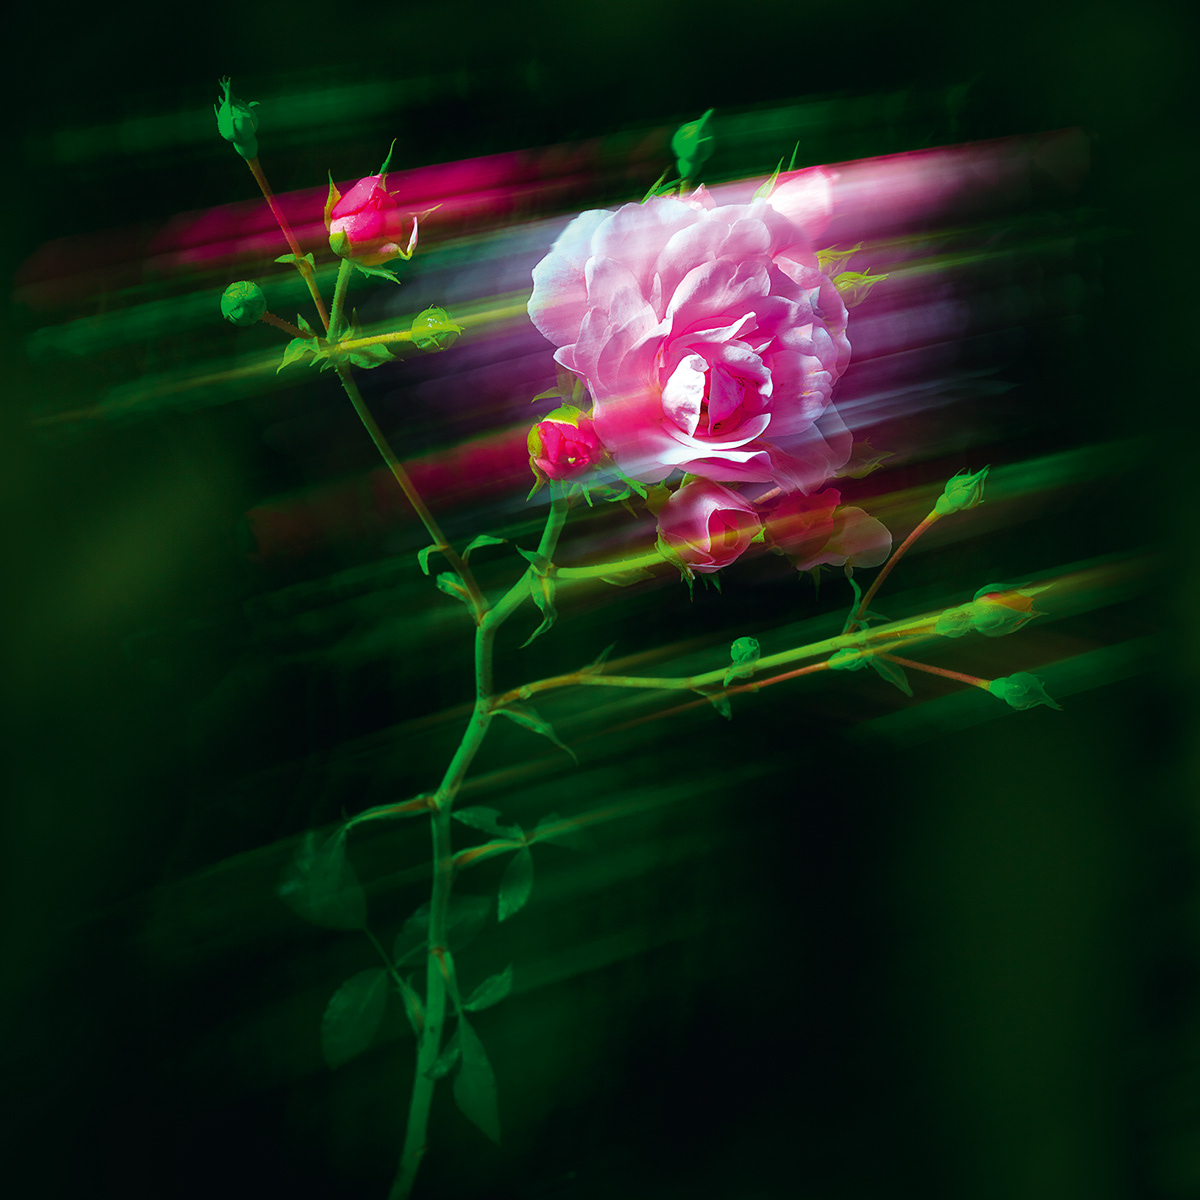 Flowers Motion blur